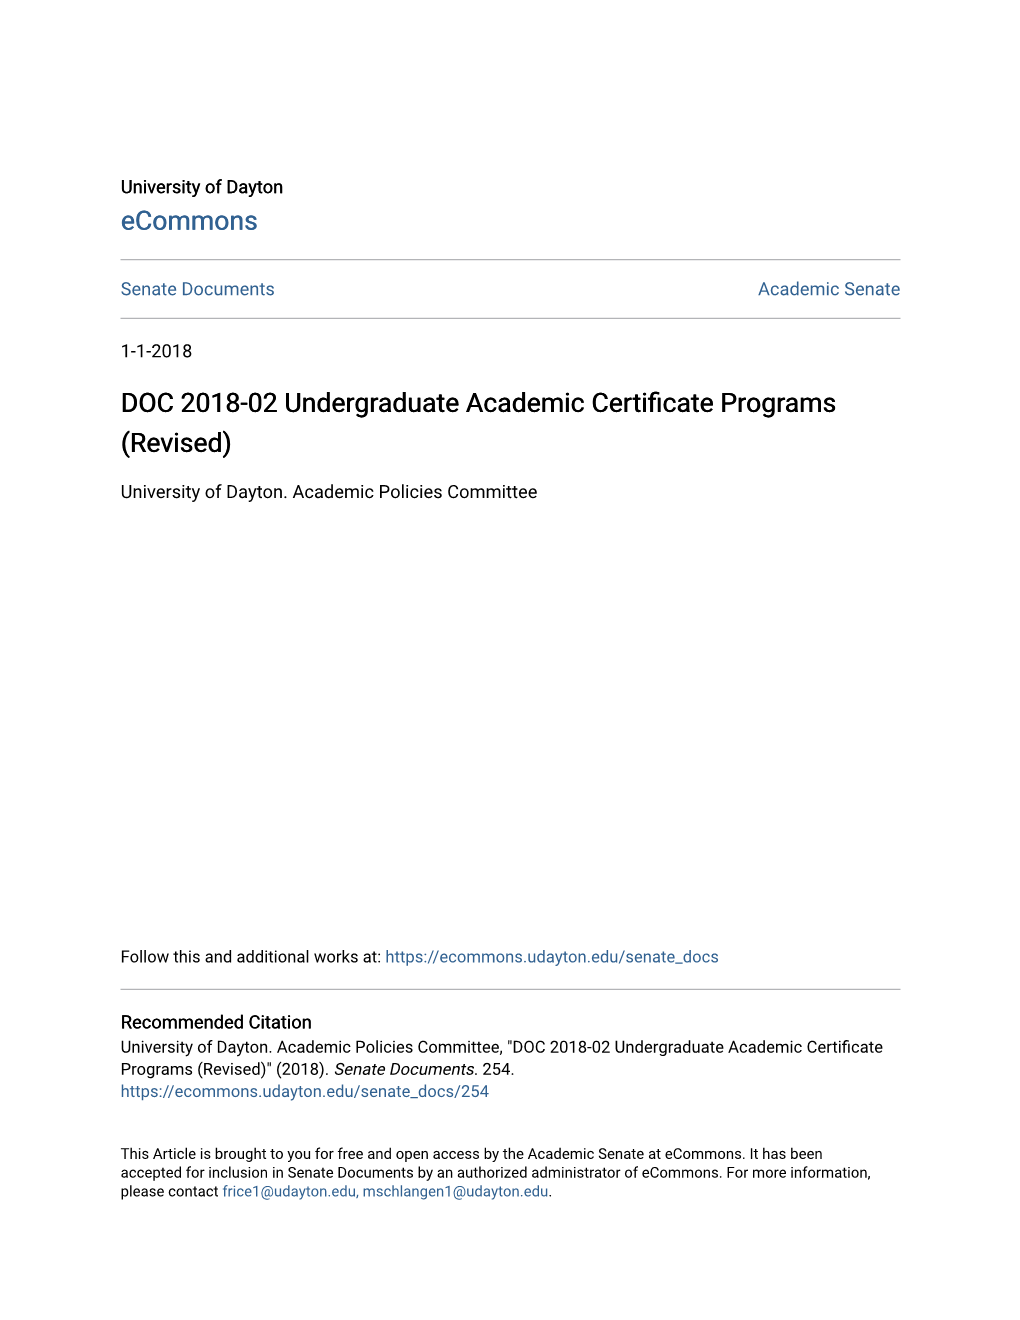 DOC 2018-02 Undergraduate Academic Certificate Programs (Revised)